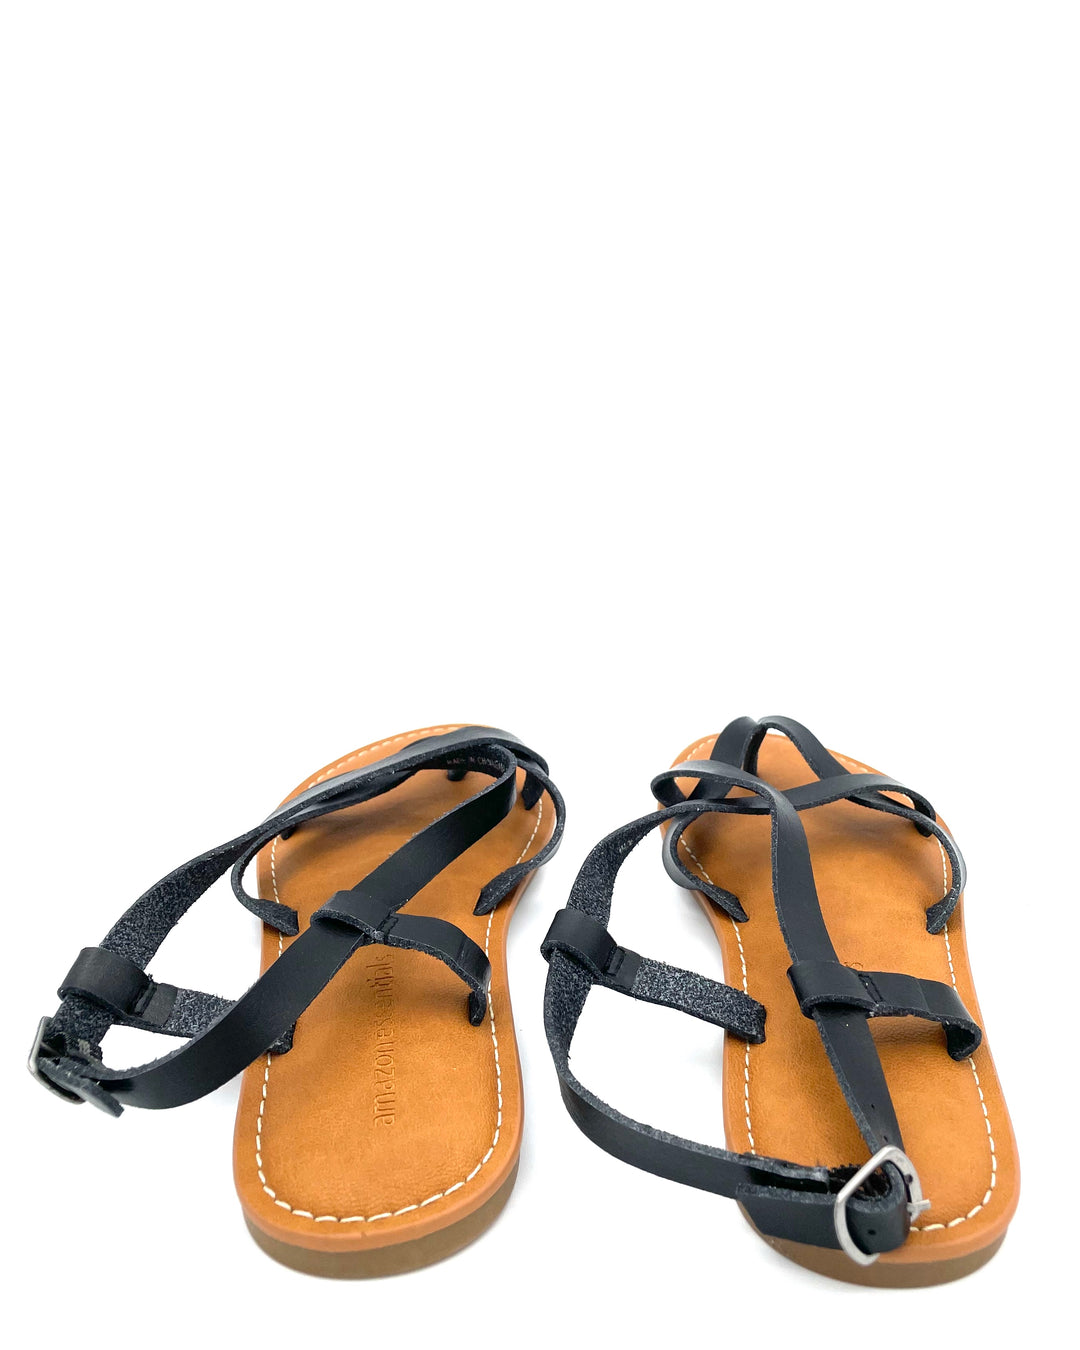 Black Strappy Sandal - Size 7